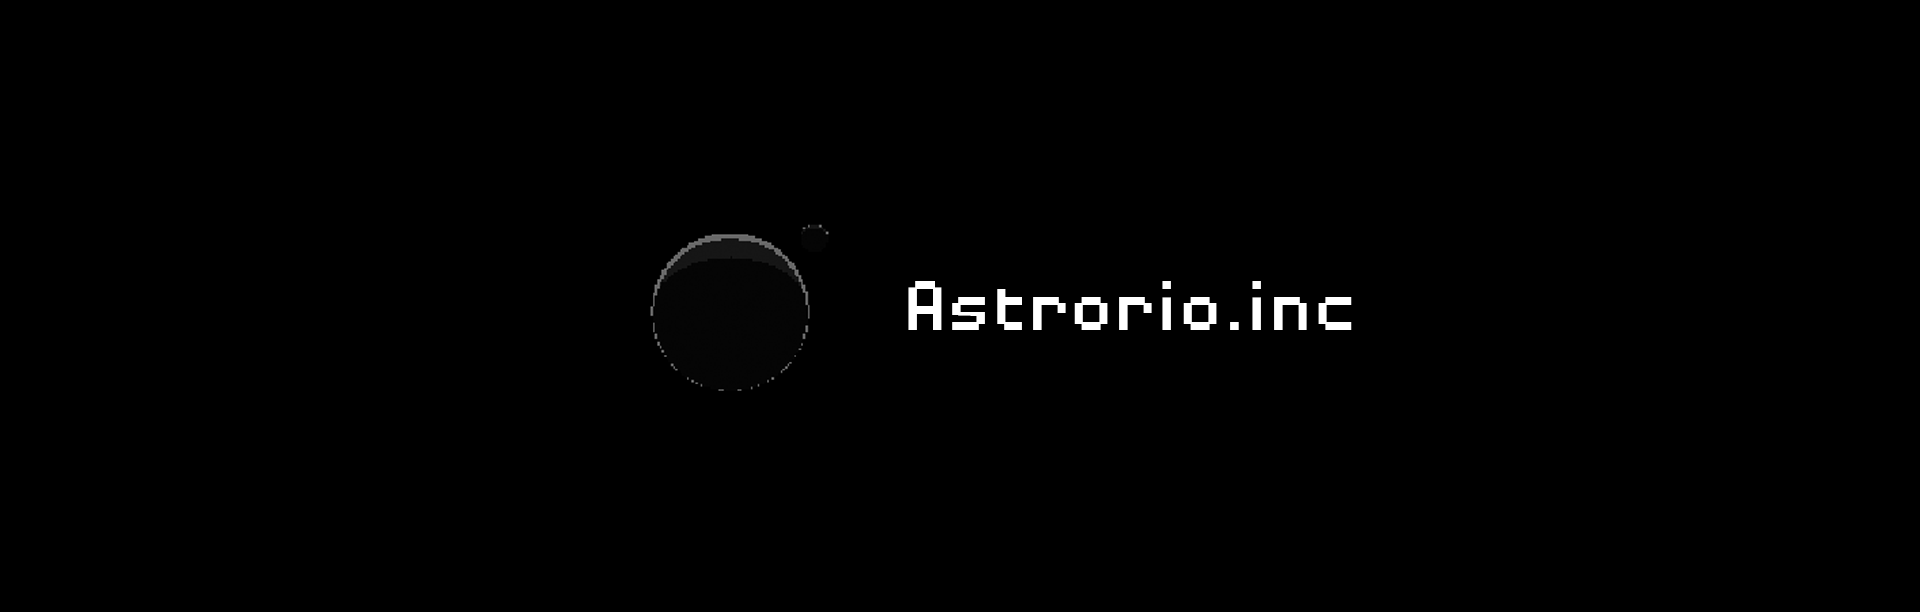 Astrorio